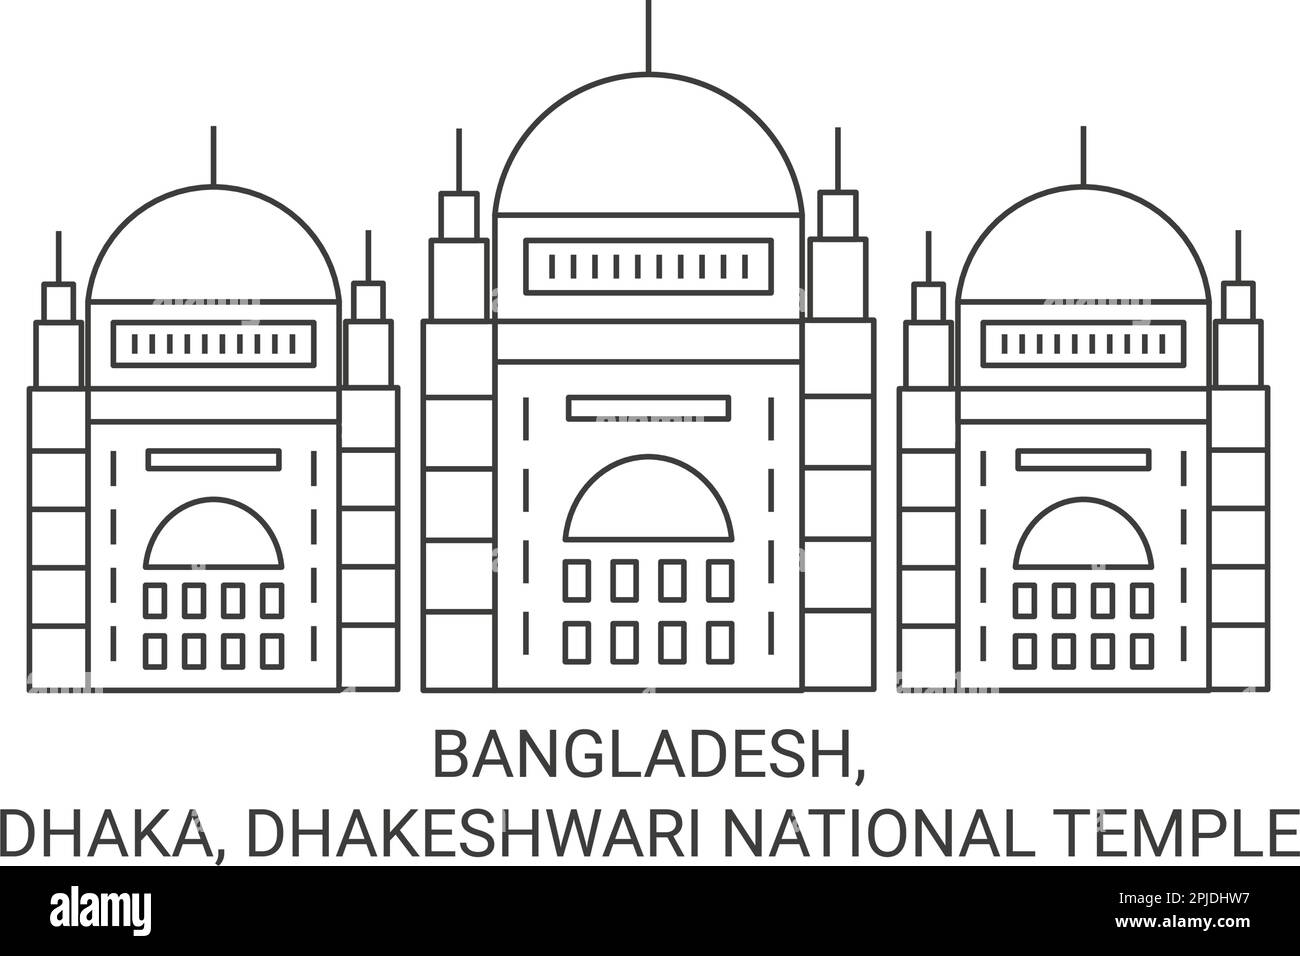 Bangladesh, Dhaka, Dhakeshwari National Temple travel landmark vector illustration Stock Vector